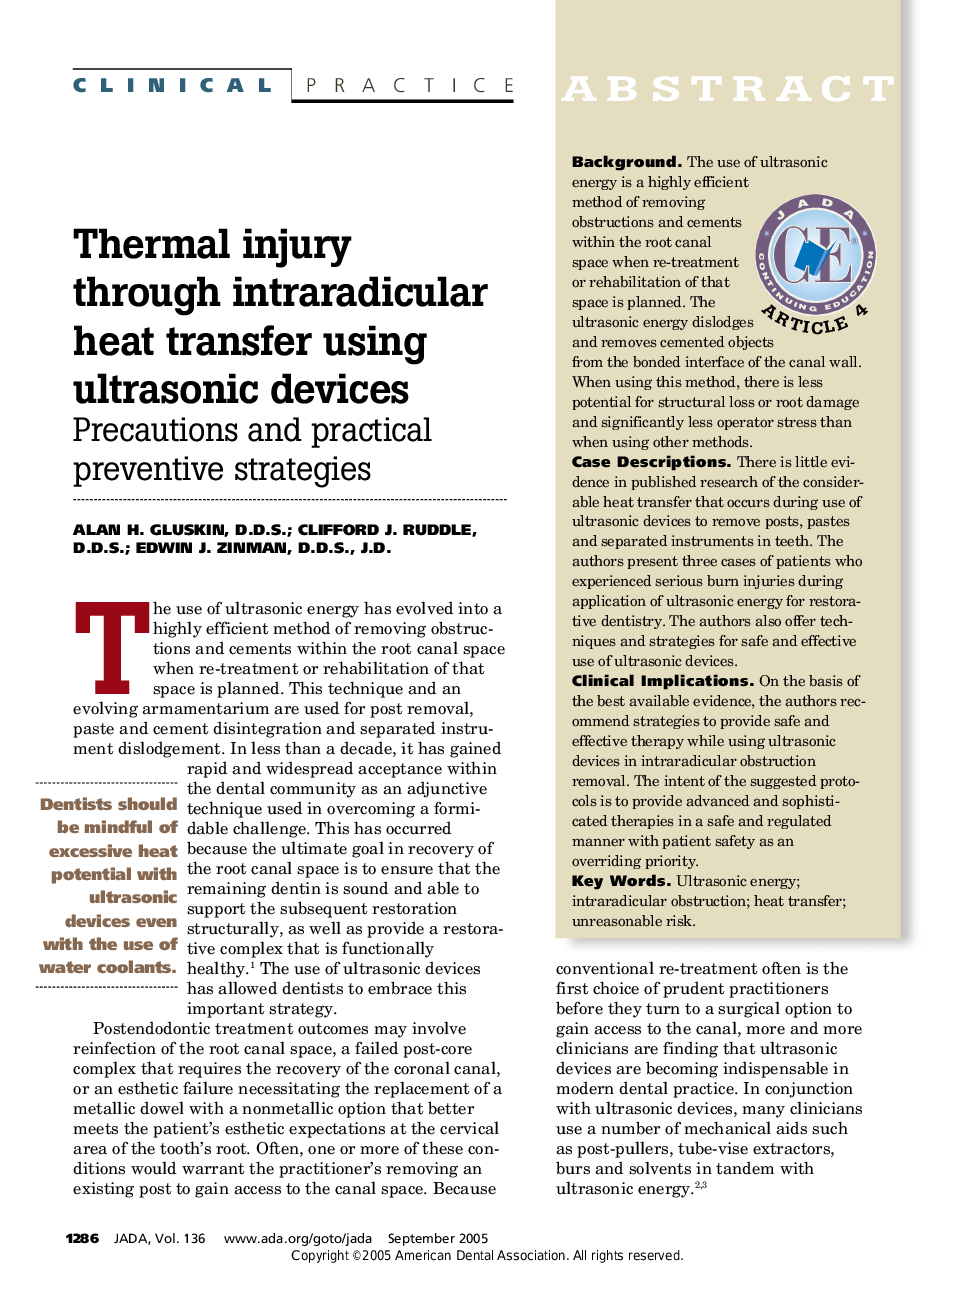 Thermal injury through intraradicular heat transfer using ultrasonic devices